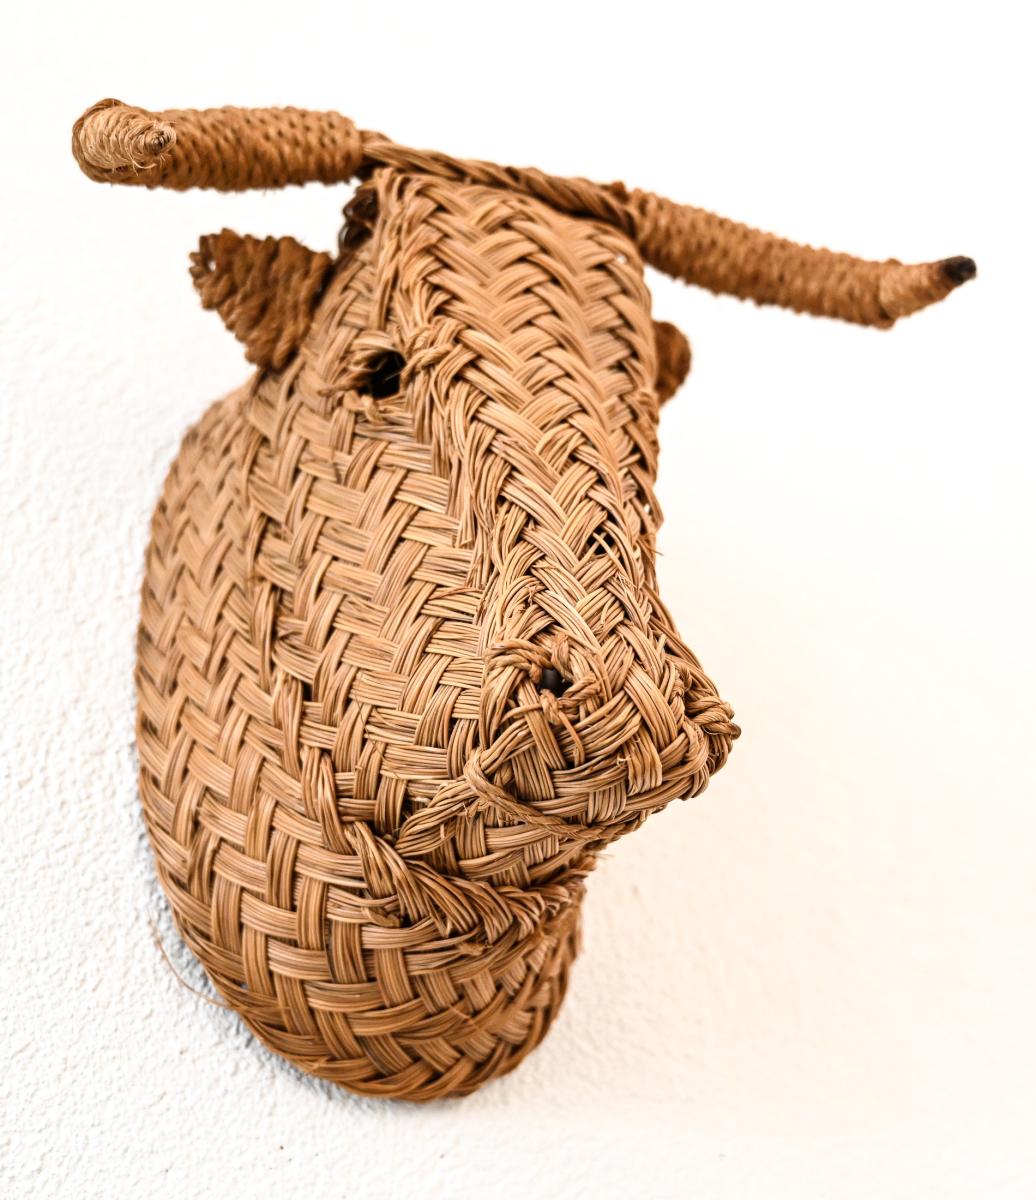 Rattan wall sculpture of a Bulls head